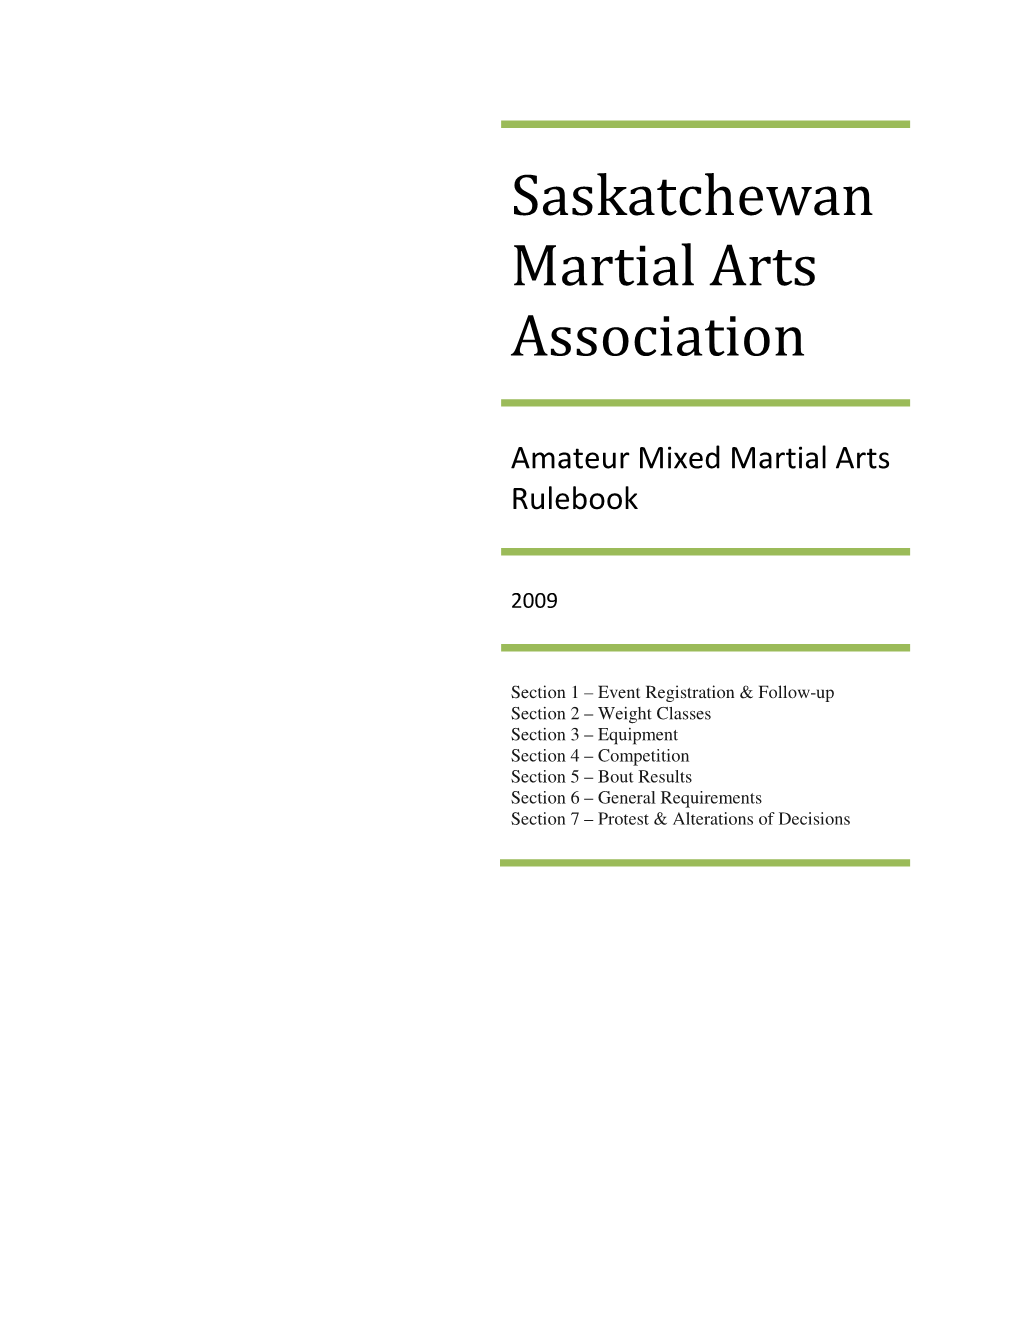 Saskatchewan Martial Arts Association